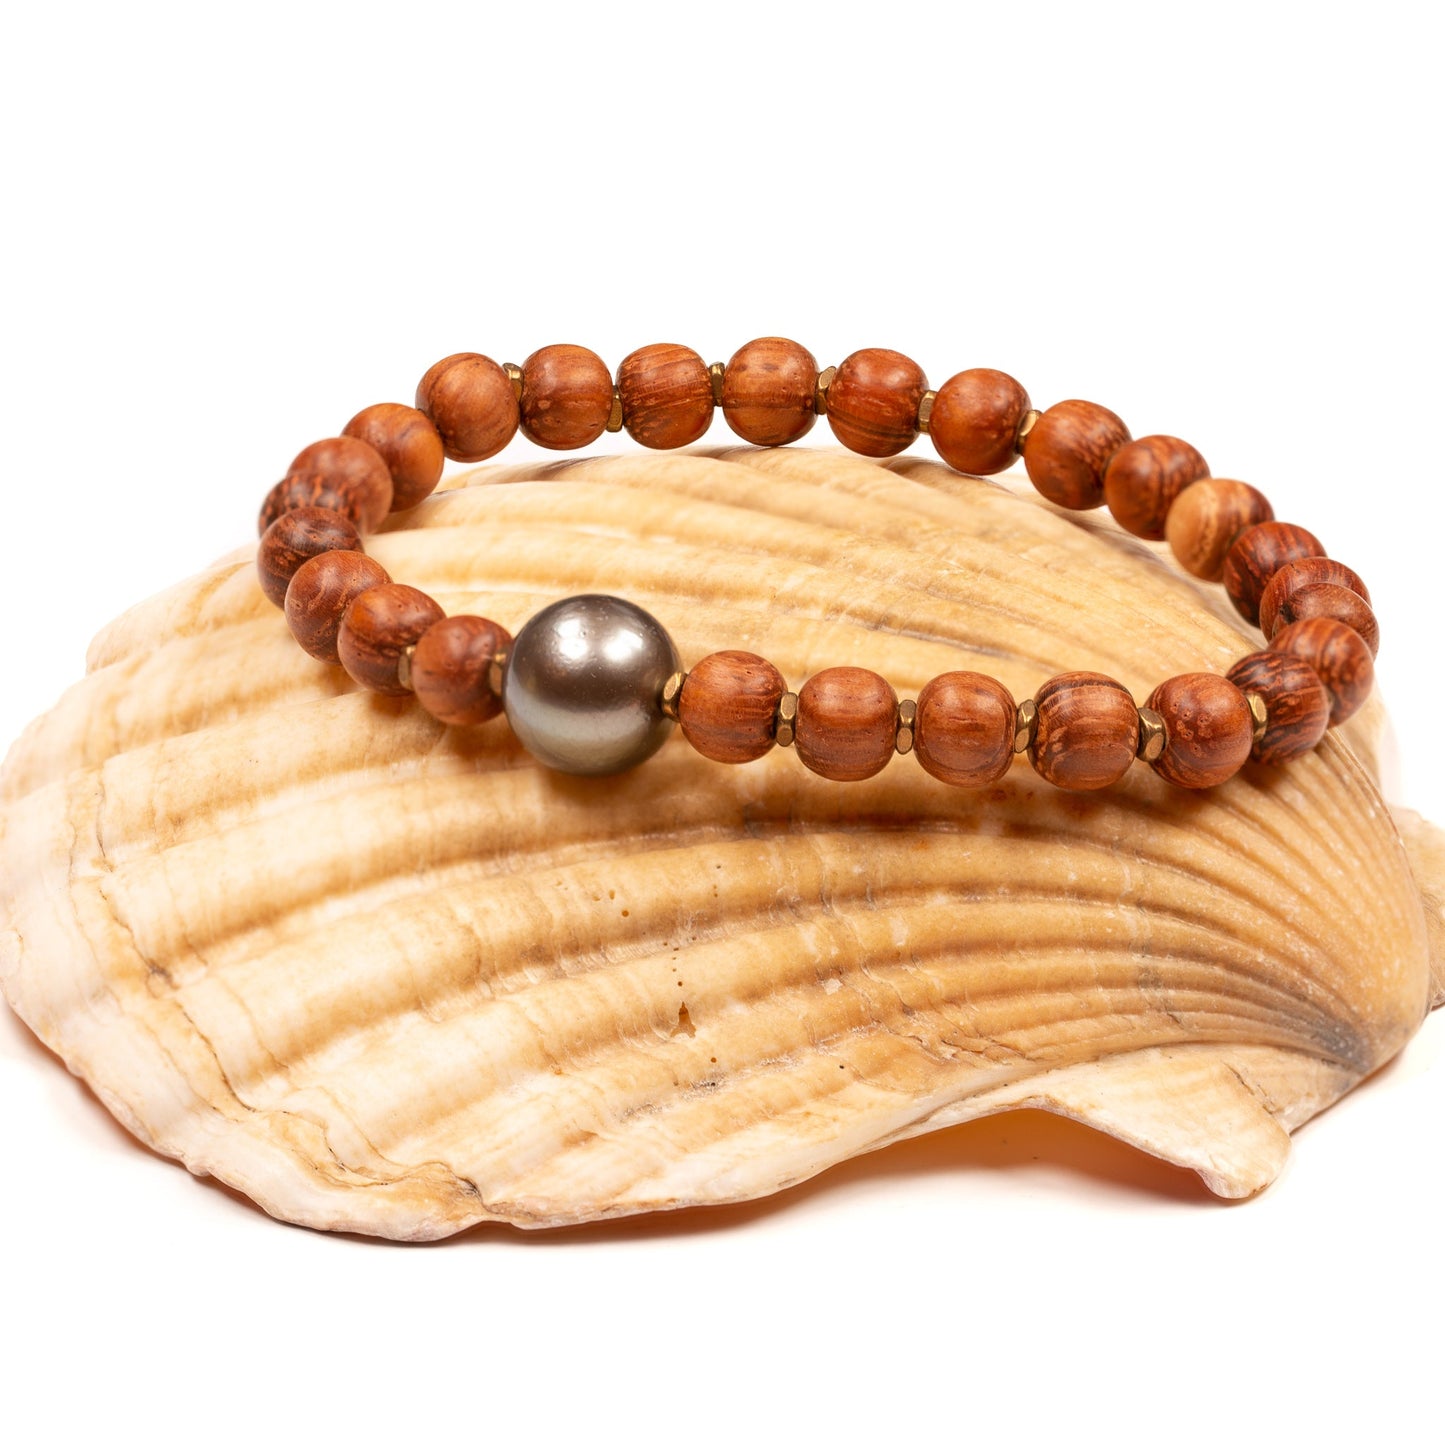 Mauka to Makai: Bayong Wood & Tahitian Pearl Stretchy Cord Bracelet - Kit or Finished Bracelet